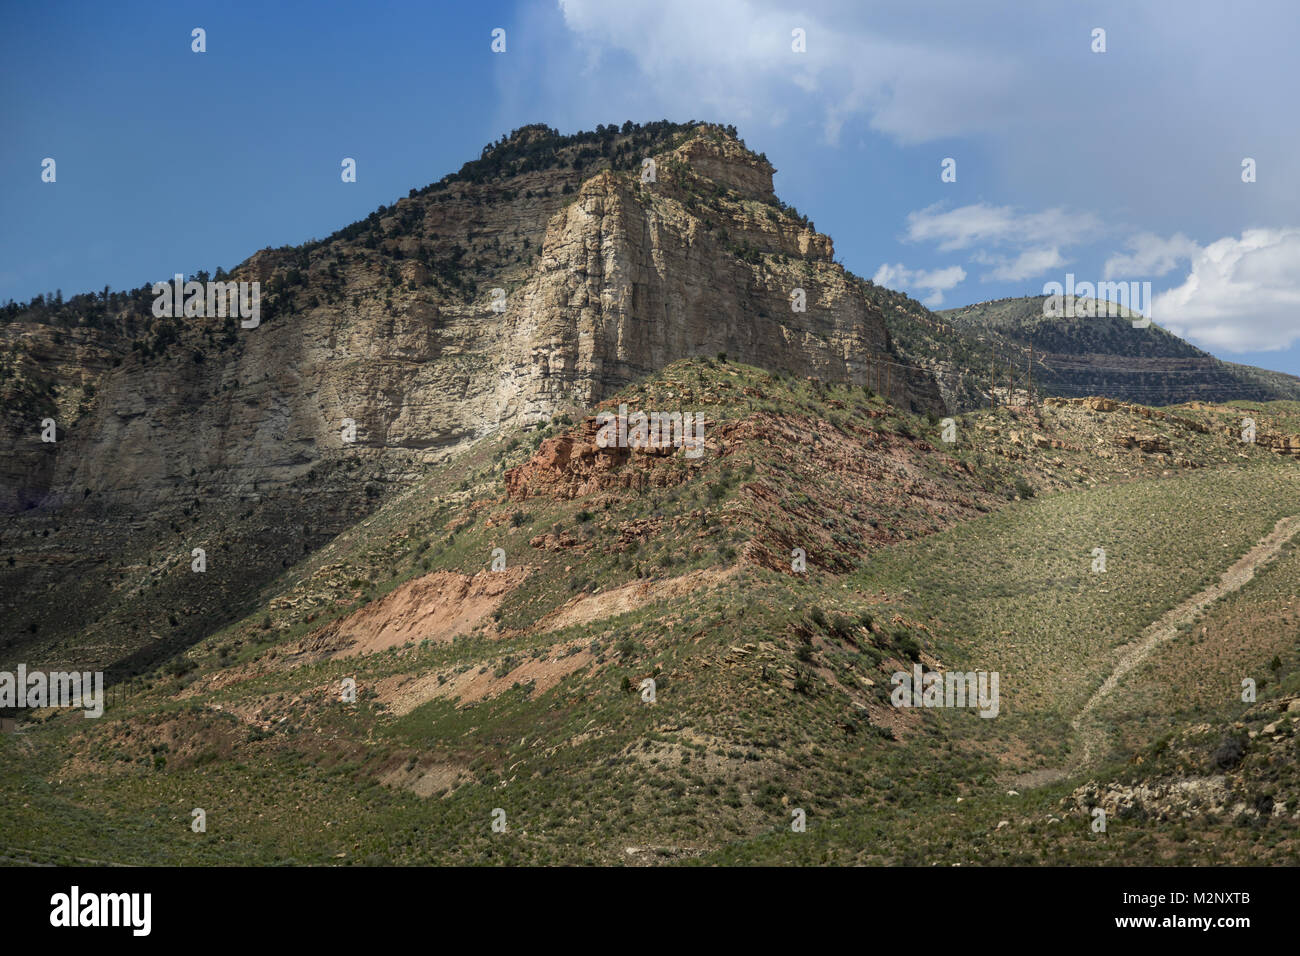 Utah-Landschaft Stockfoto